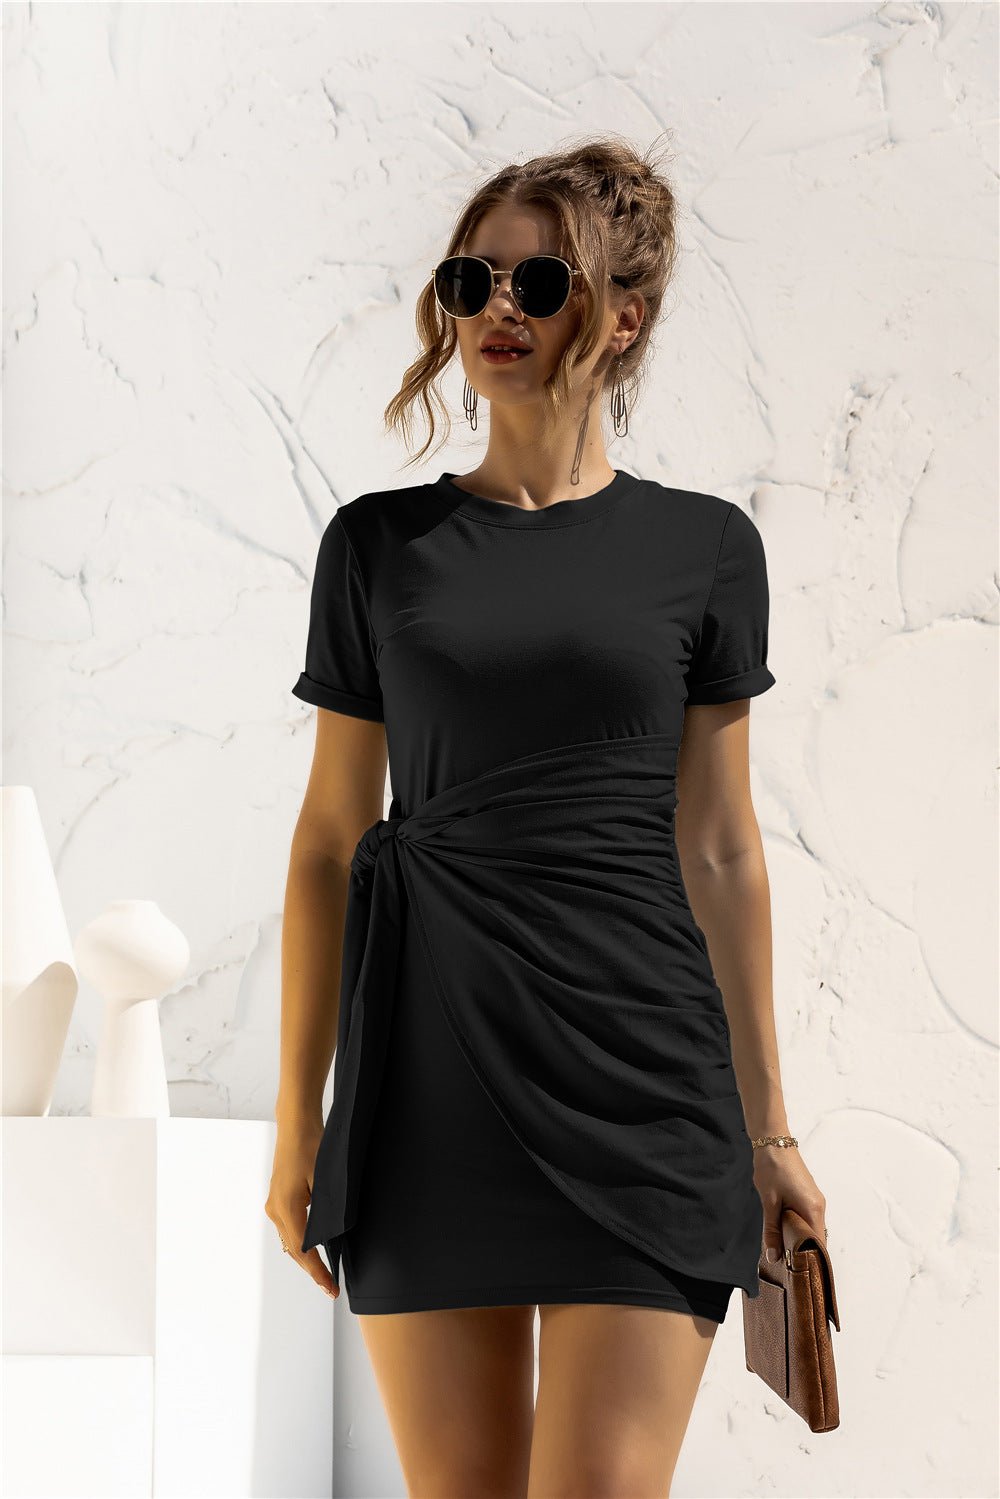 Round Neck Cuffed Sleeve Side Tie Dress - Fashion Girl Online Store